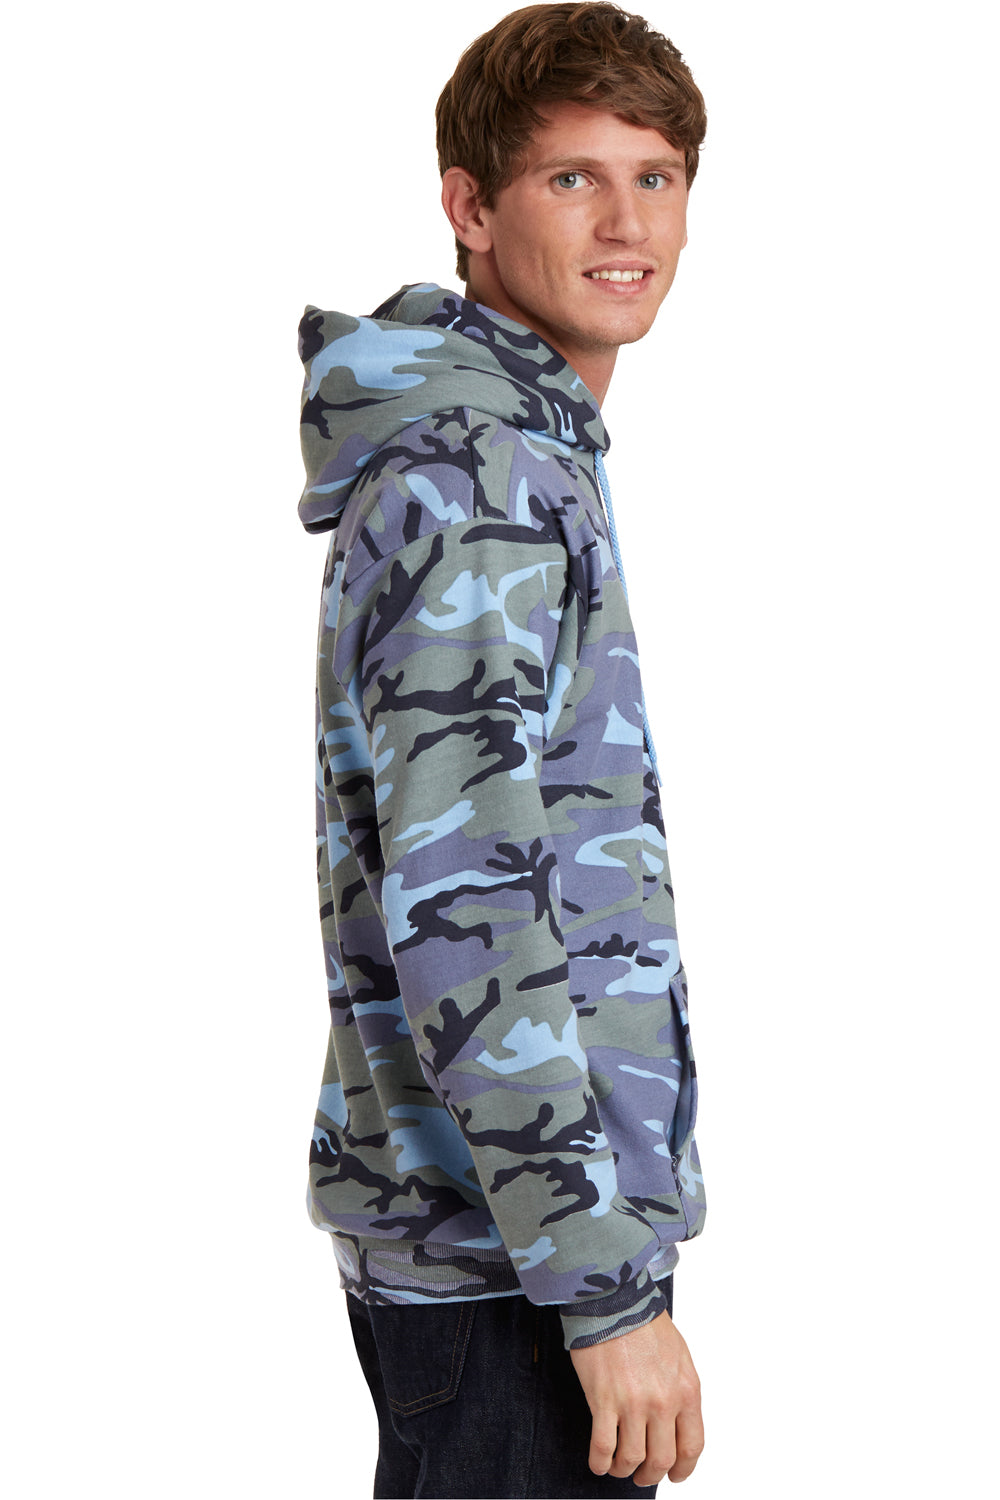 Port & Company Core Fleece Camo Pullover Hooded Sweatshirt, Product